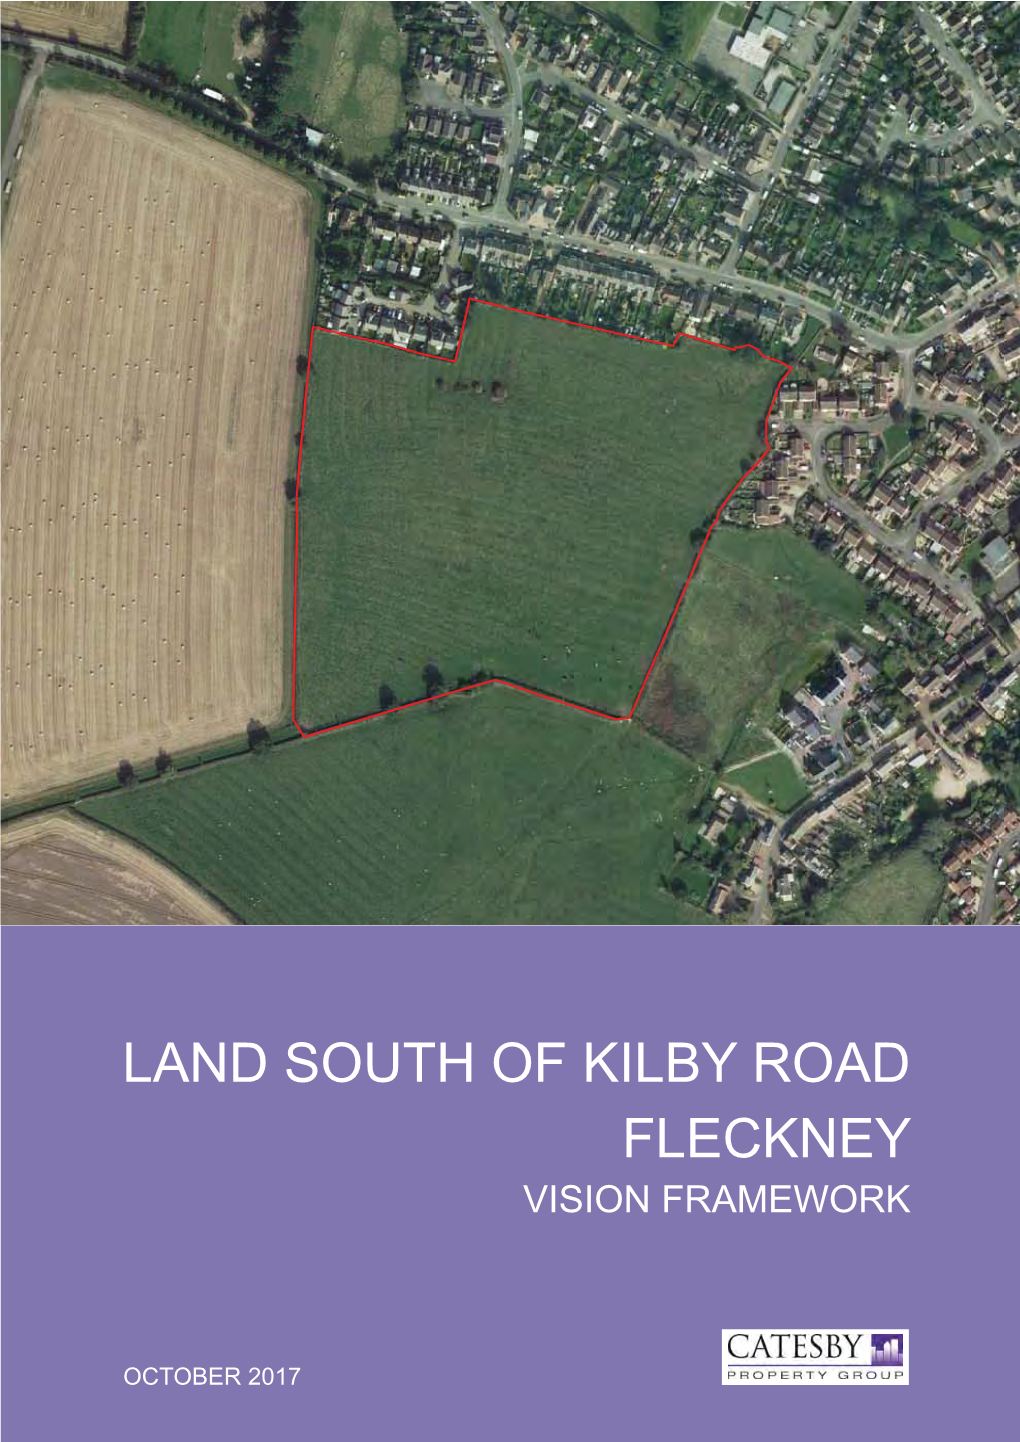 Land South of Kilby Road Fleckney Vision Framework